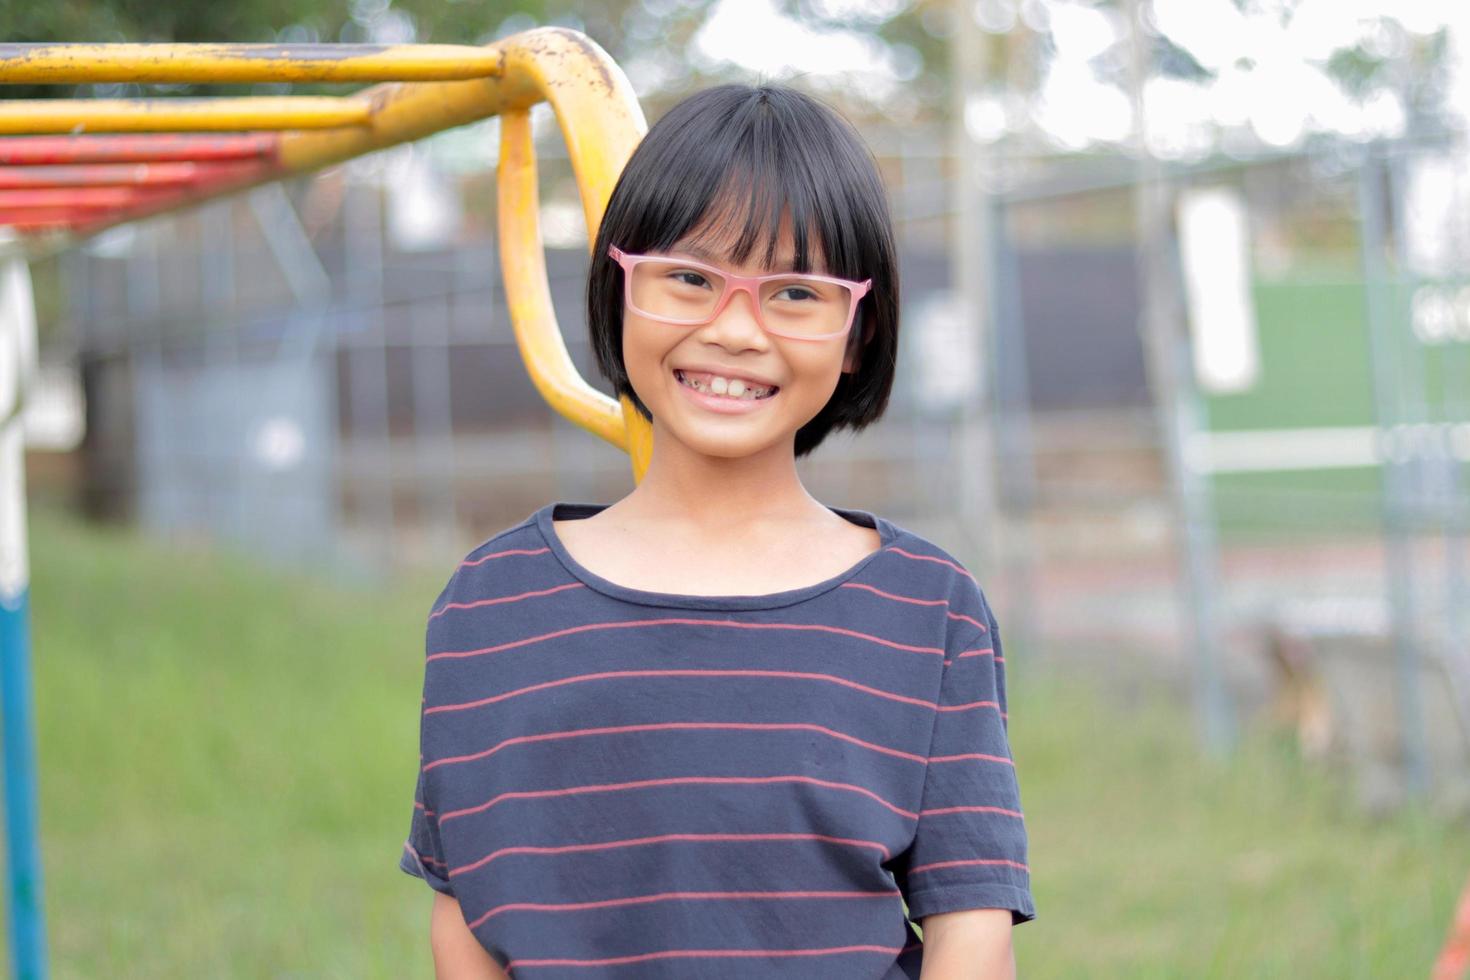 Happiness child wearing eyeglasses photo